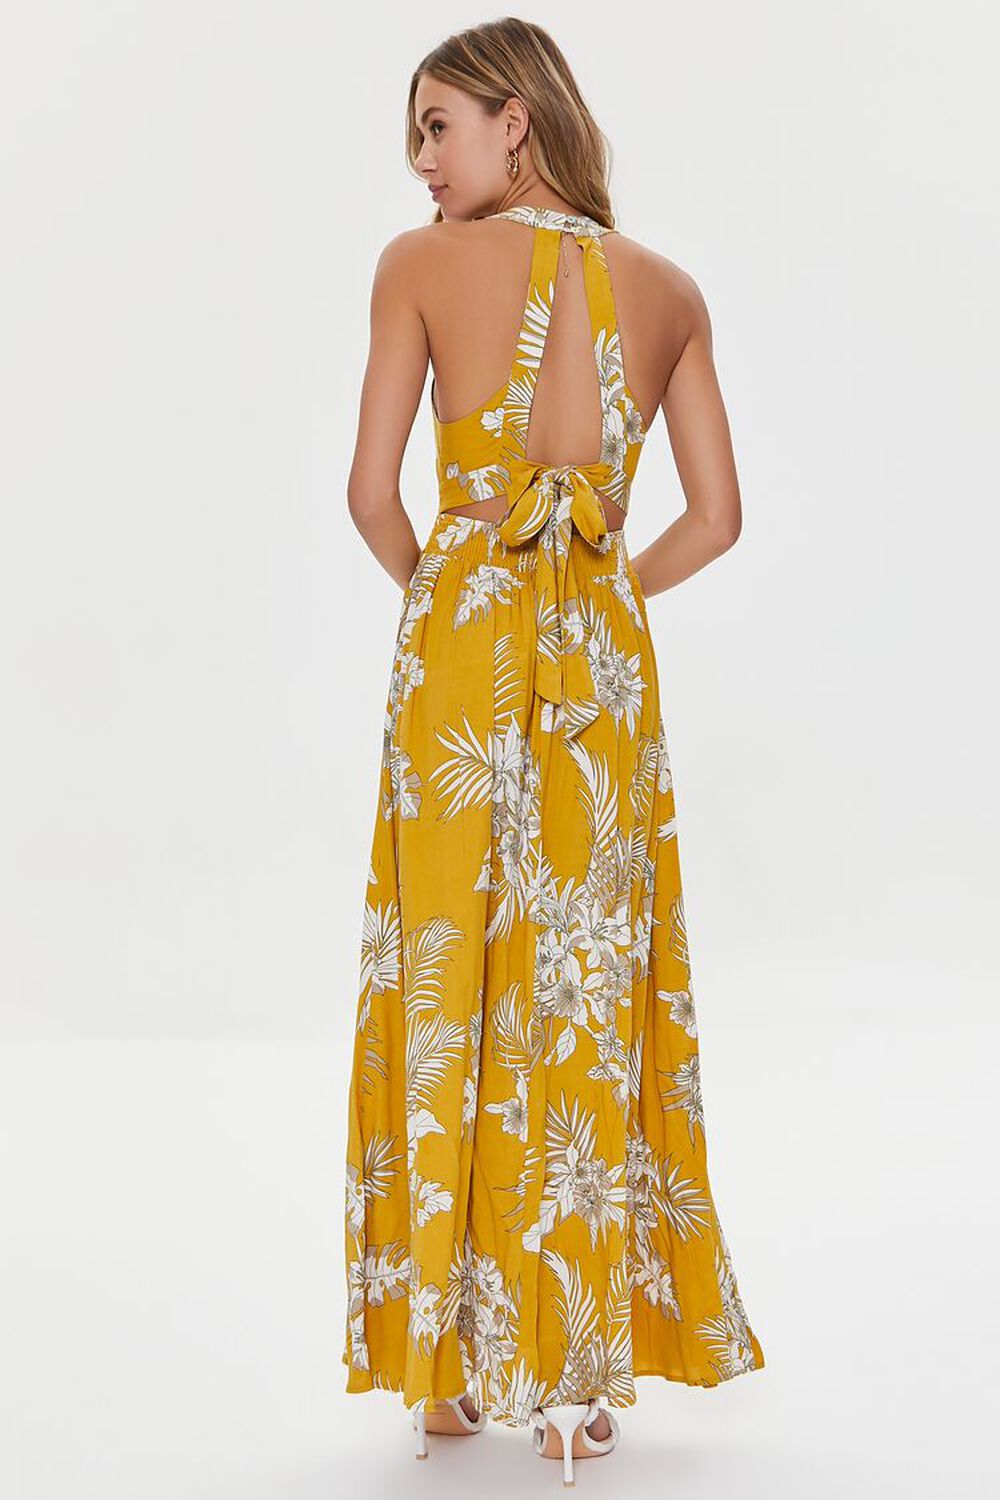 YELLOW/MULTI Tropical Leaf Print Maxi Dress, image 3